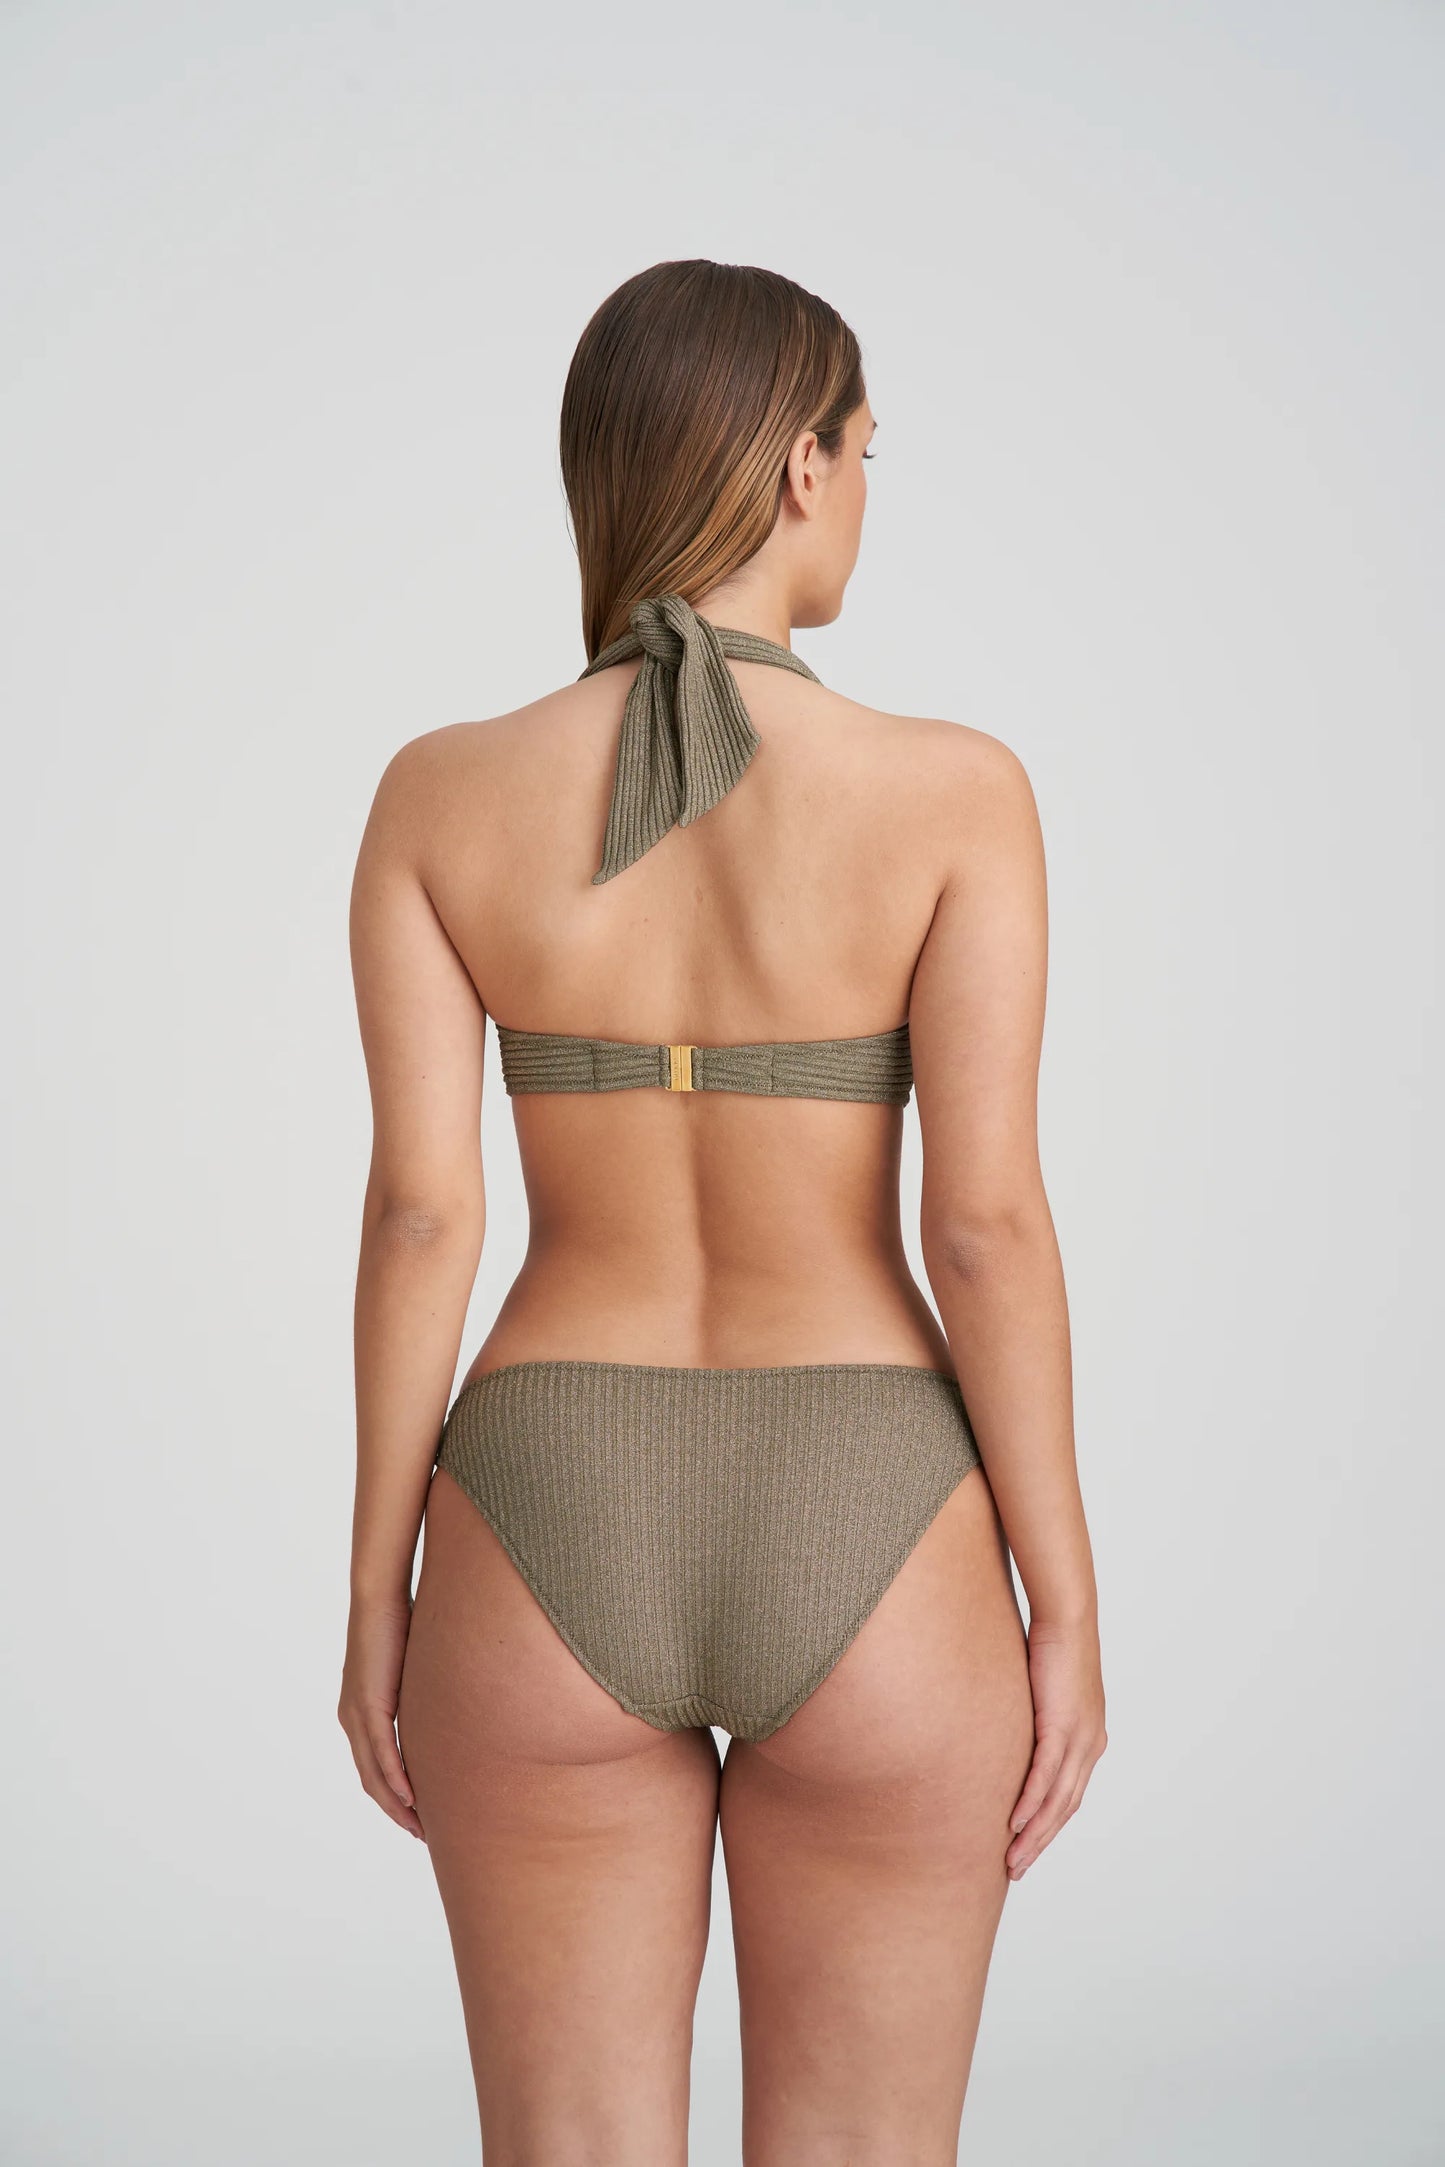 Marie Jo Swim Voorgevormde Triangel Bikini - Tinjis 1006913 / 1006950 - Golden olive